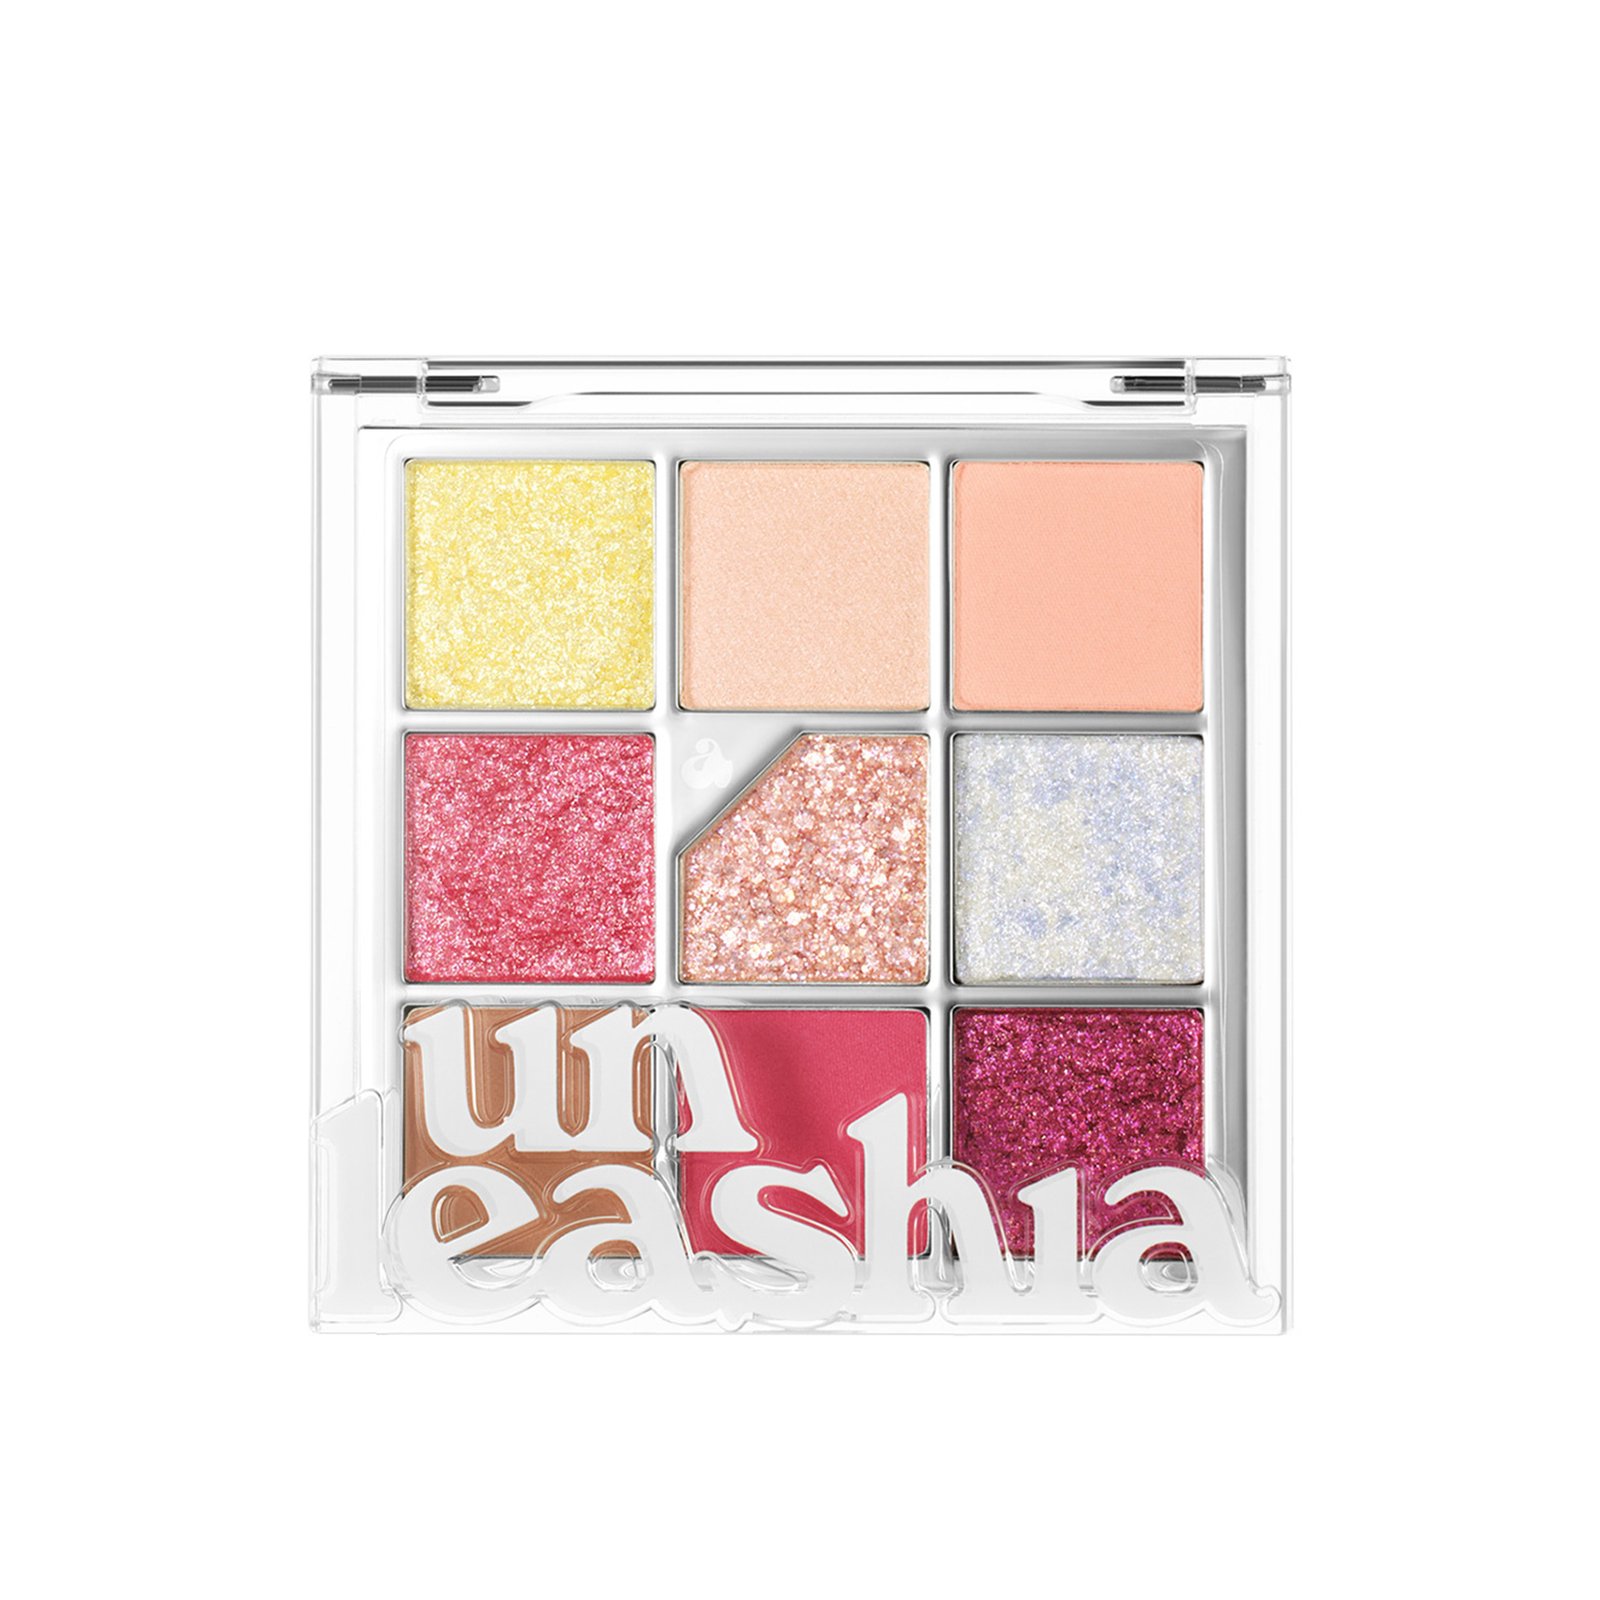 Unleashia Glitterpedia Eye Palette 7 All Of Peach Ade 6.6g